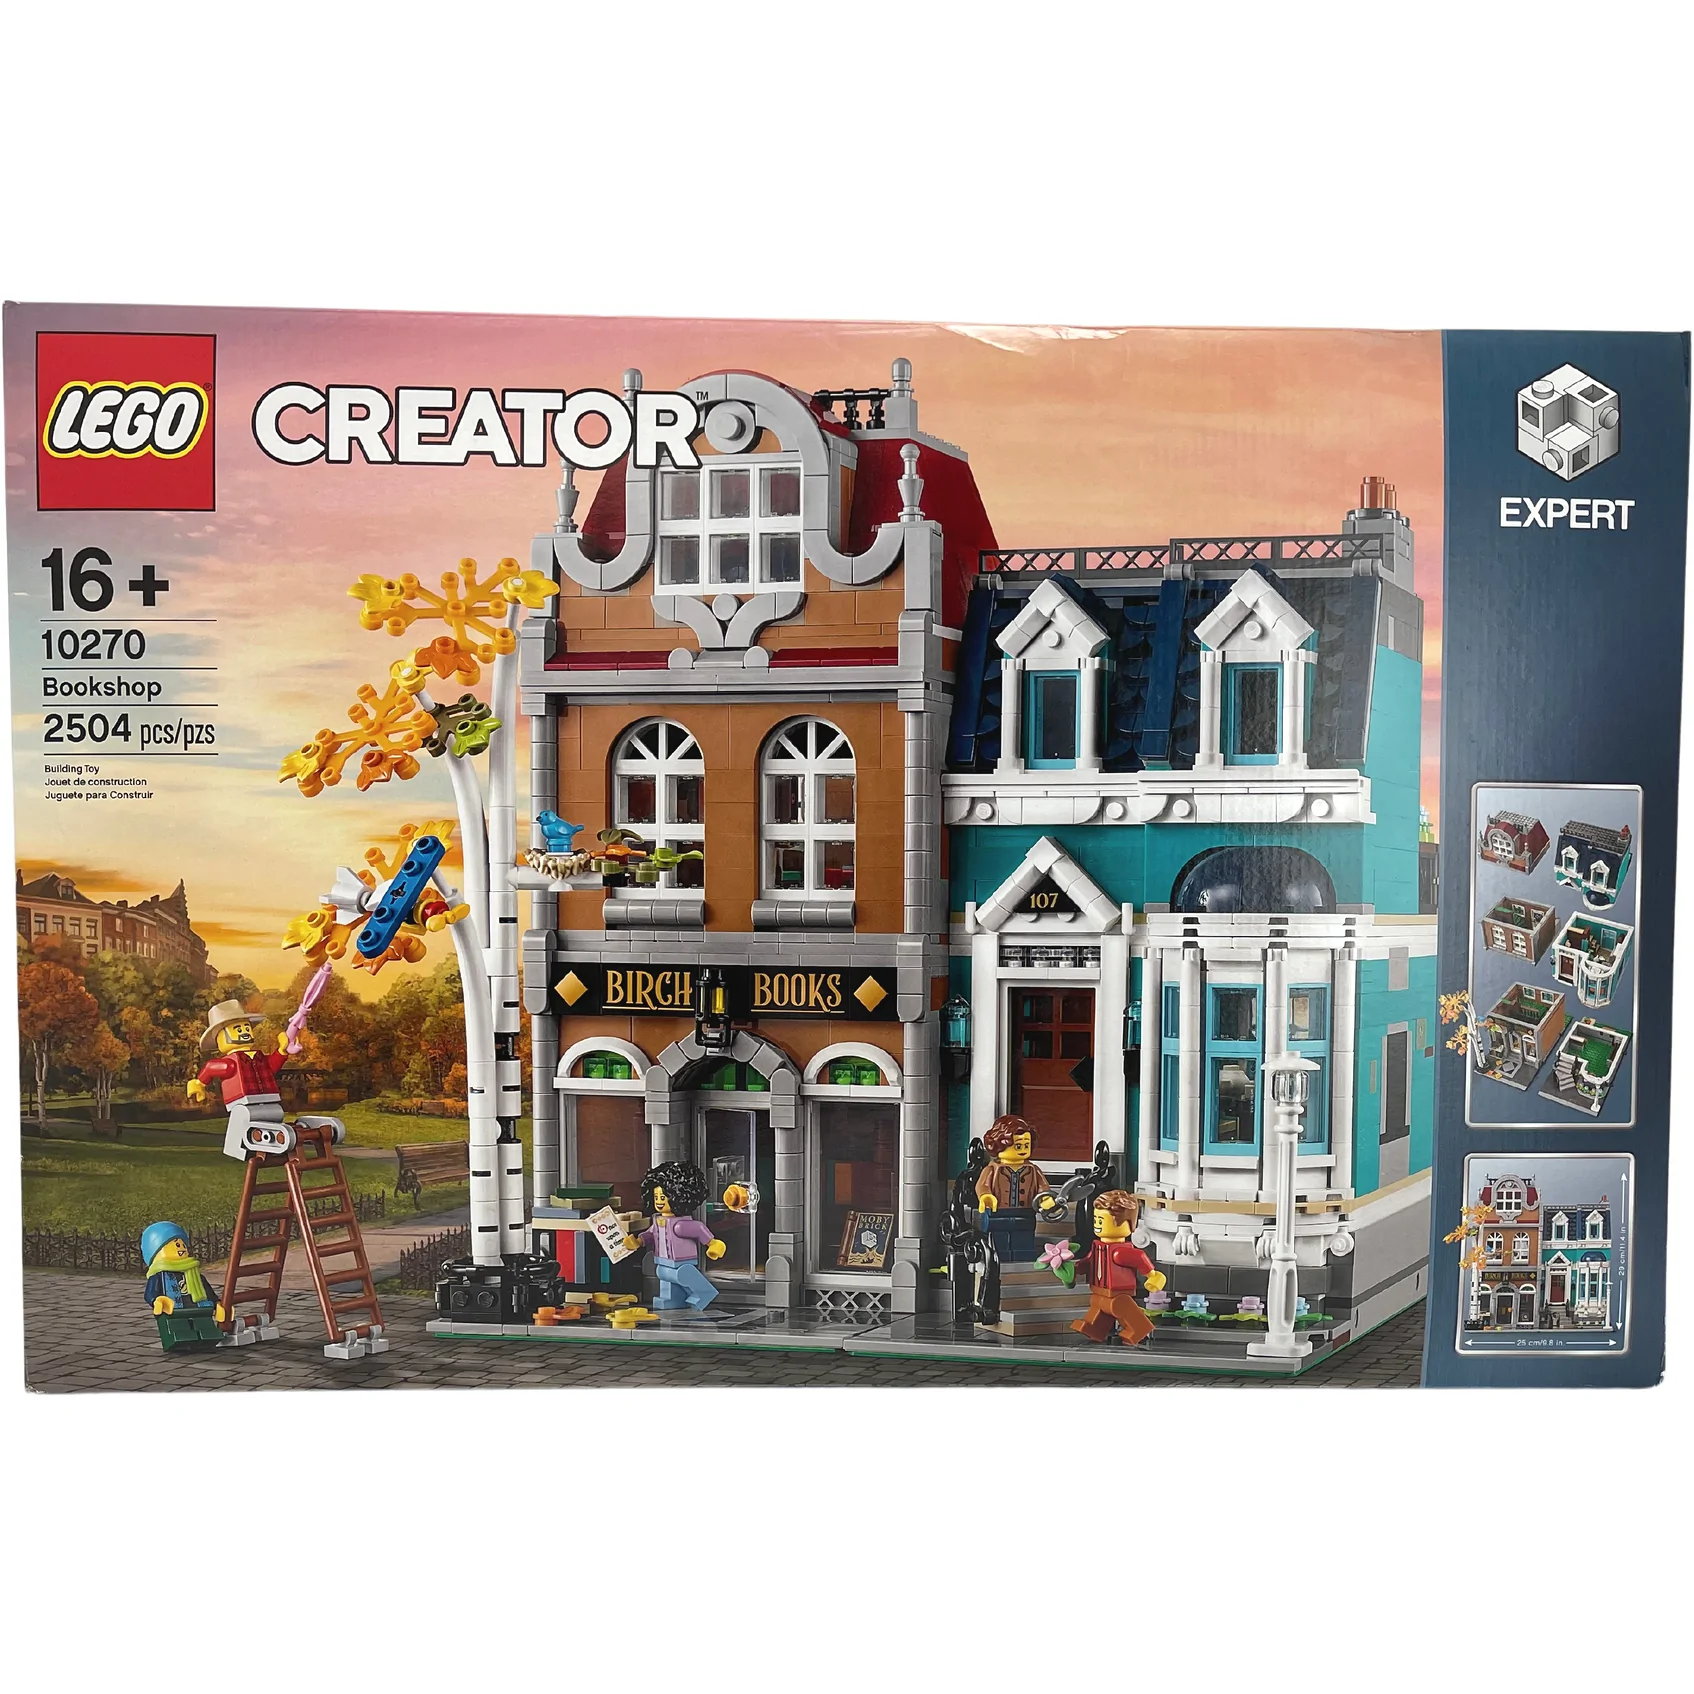 LEGO Creator Bookshop Building Toy / 10270 / 2504 Pieces / Expert Level